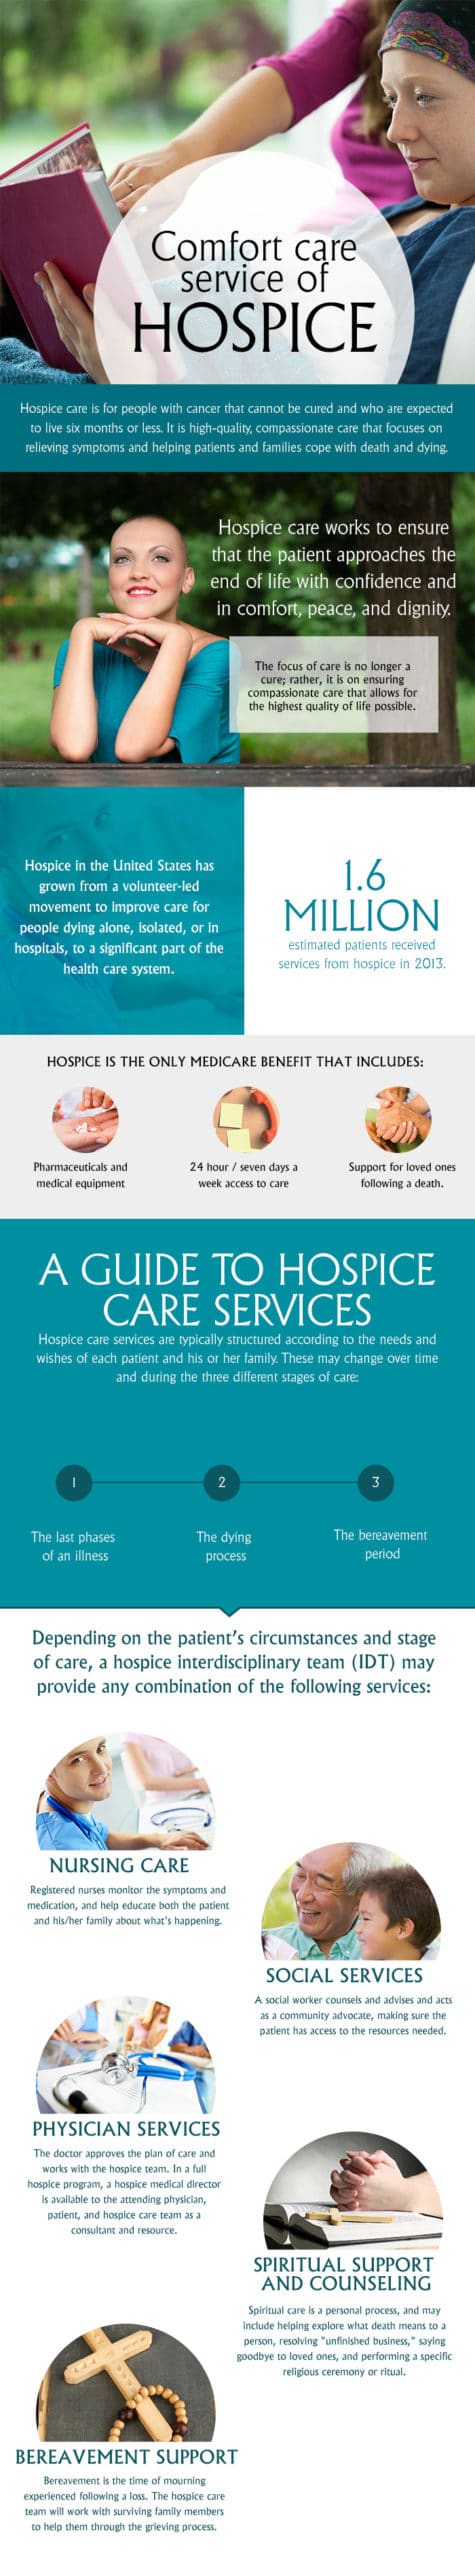 Comfort Care Service of Hospice